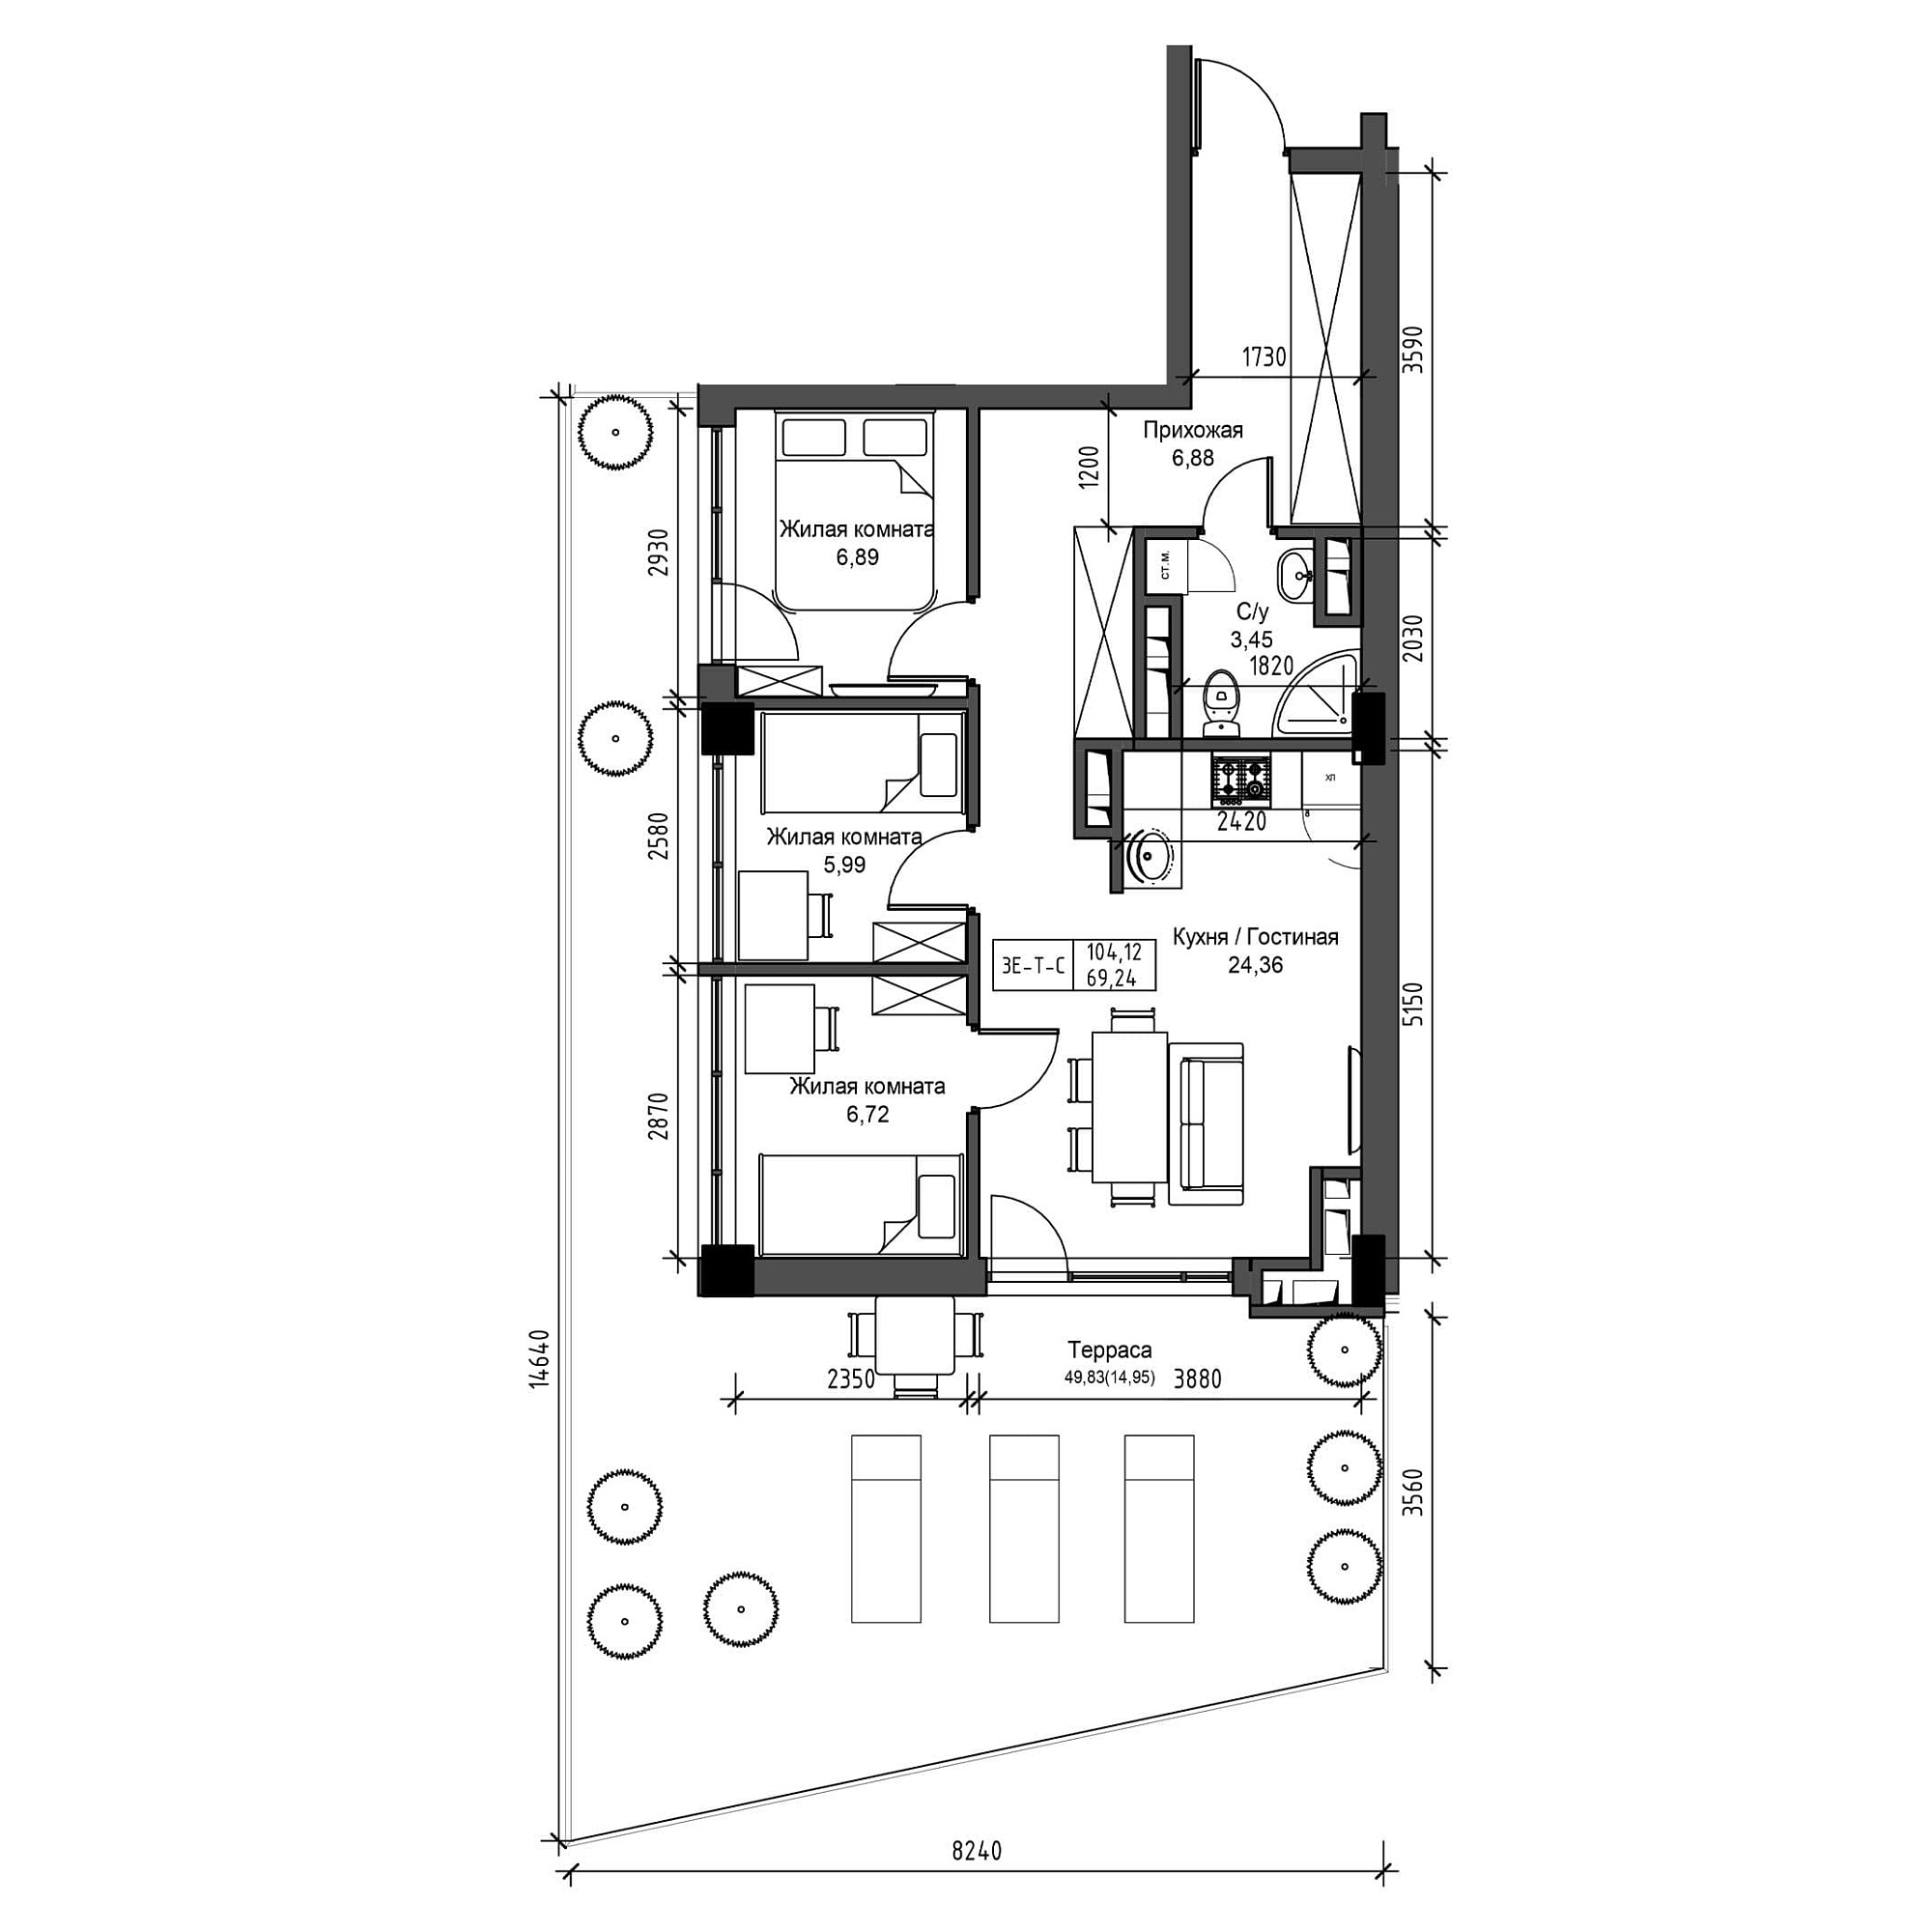 Планування 3-к квартира площею 69.24м2, UM-001-09/0010.